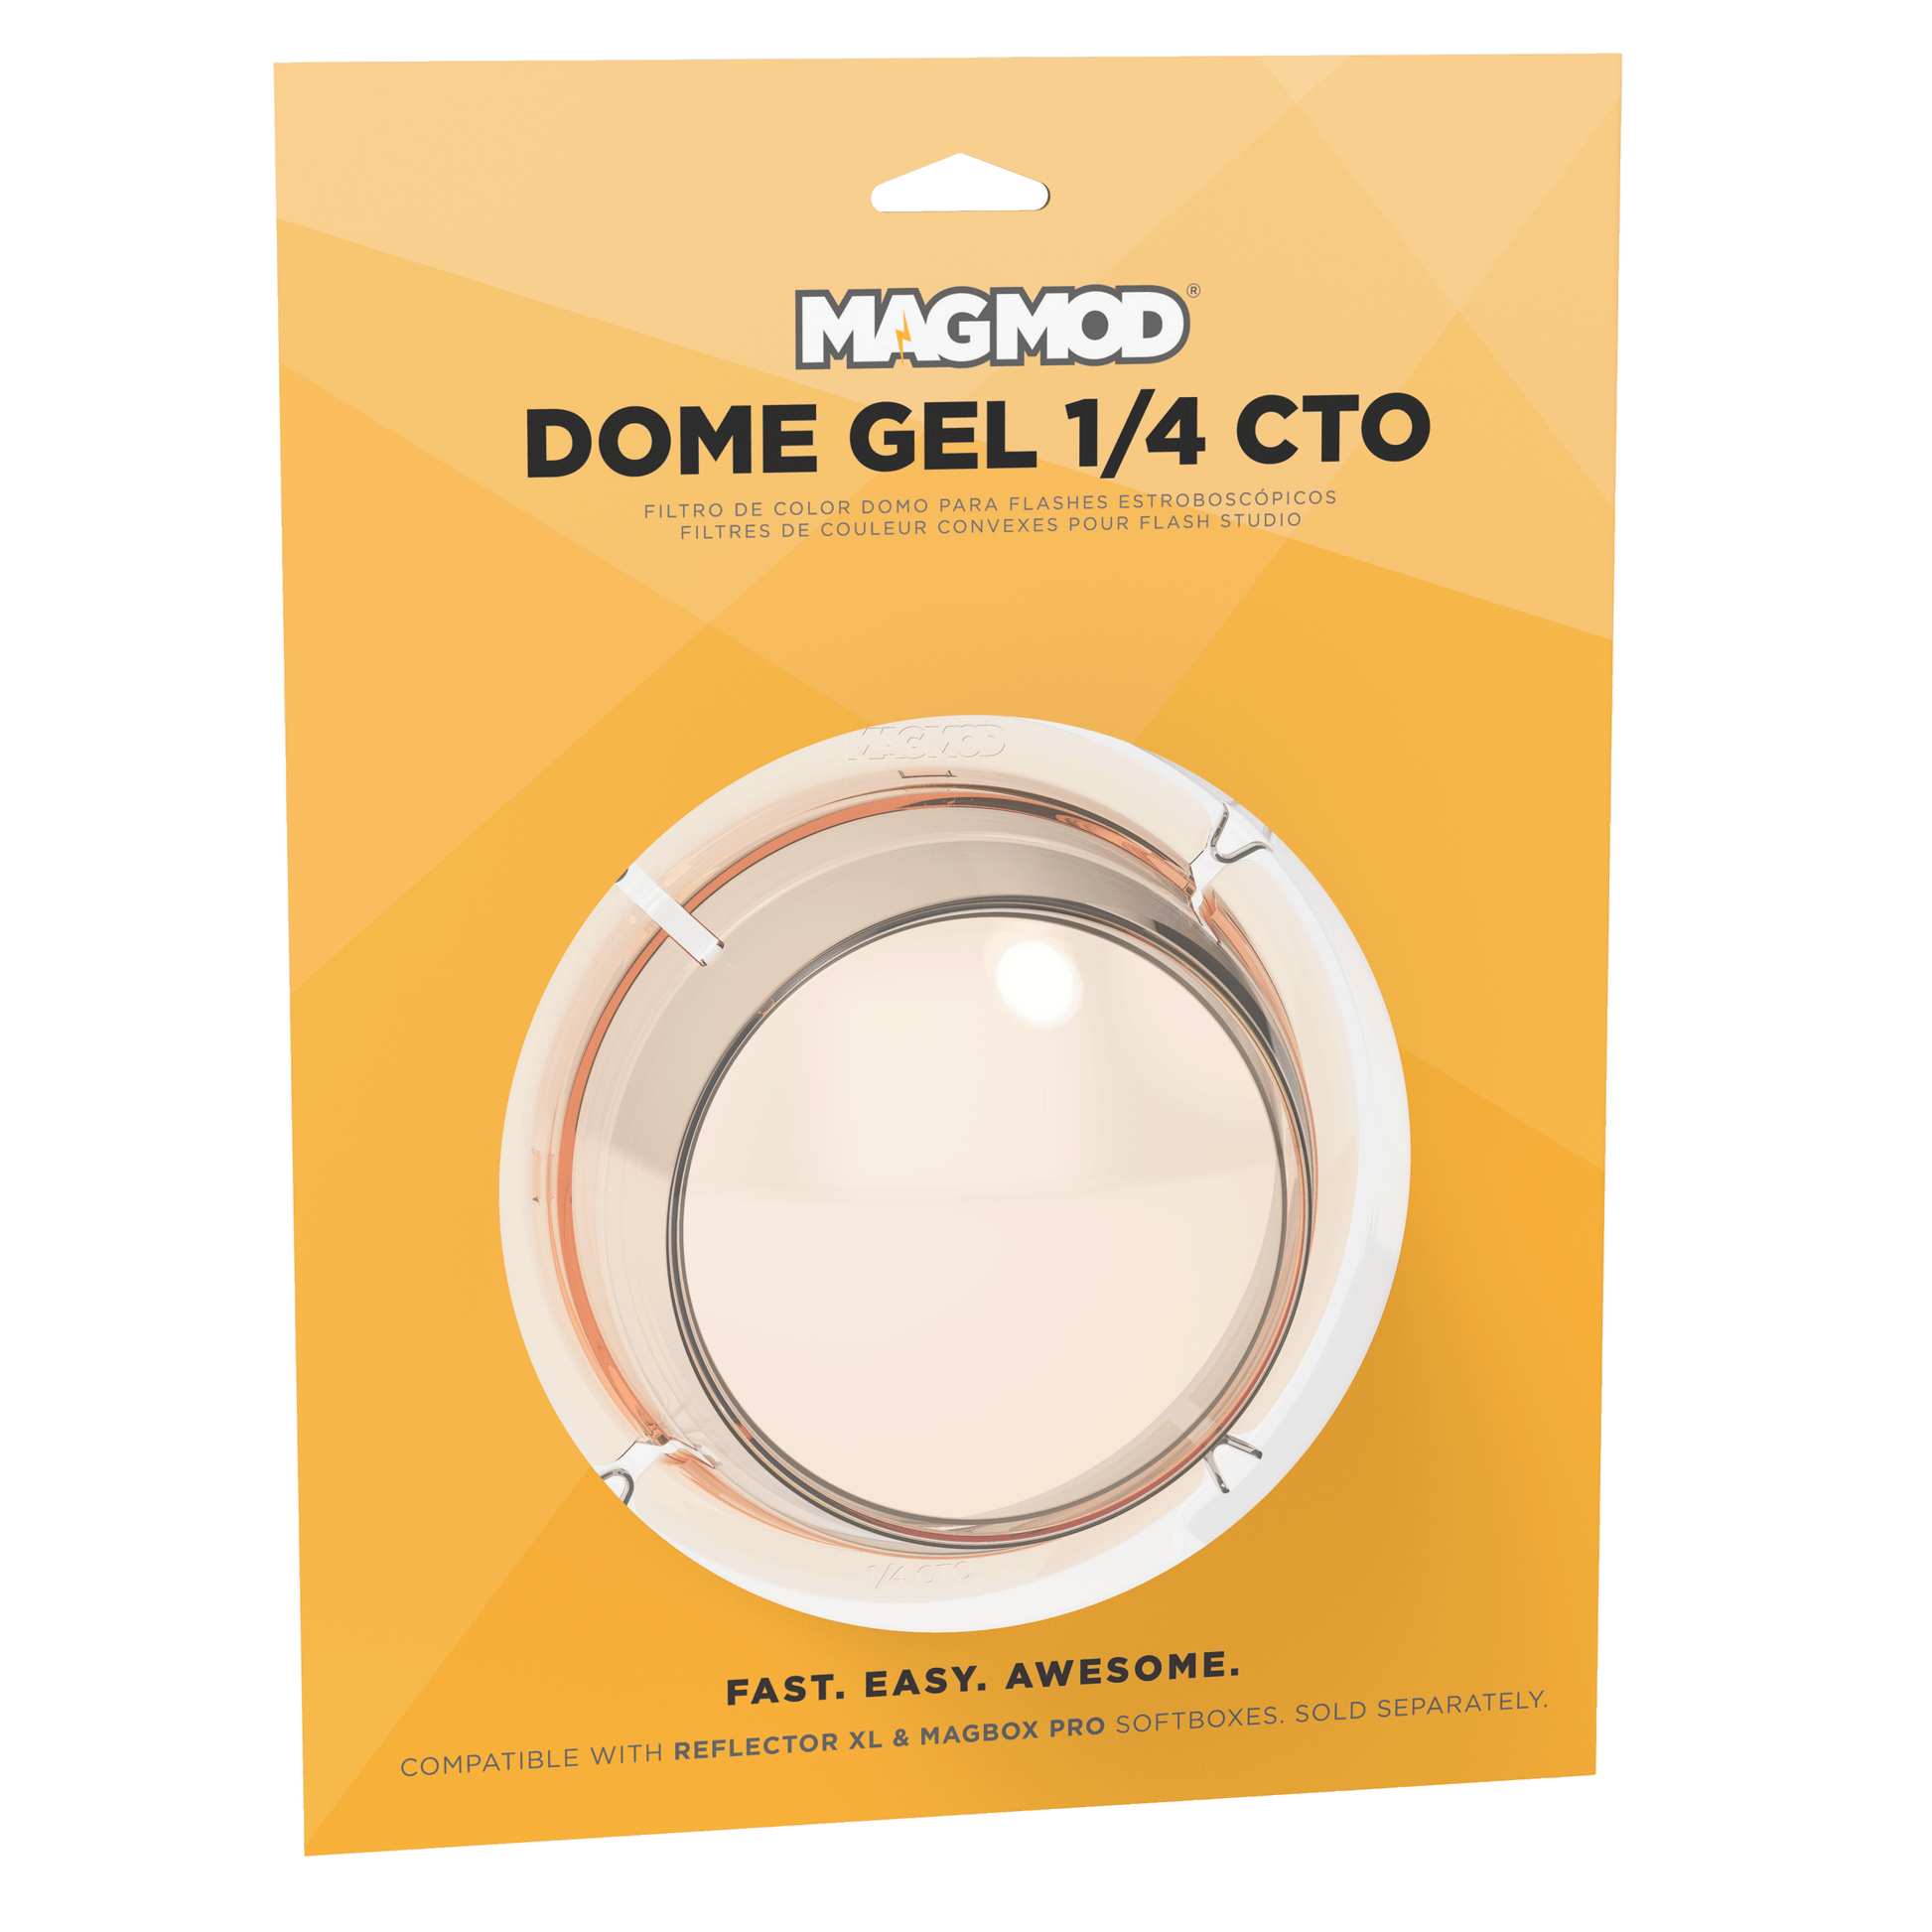 Dome Gel 1/4 CTO - MagnetMod